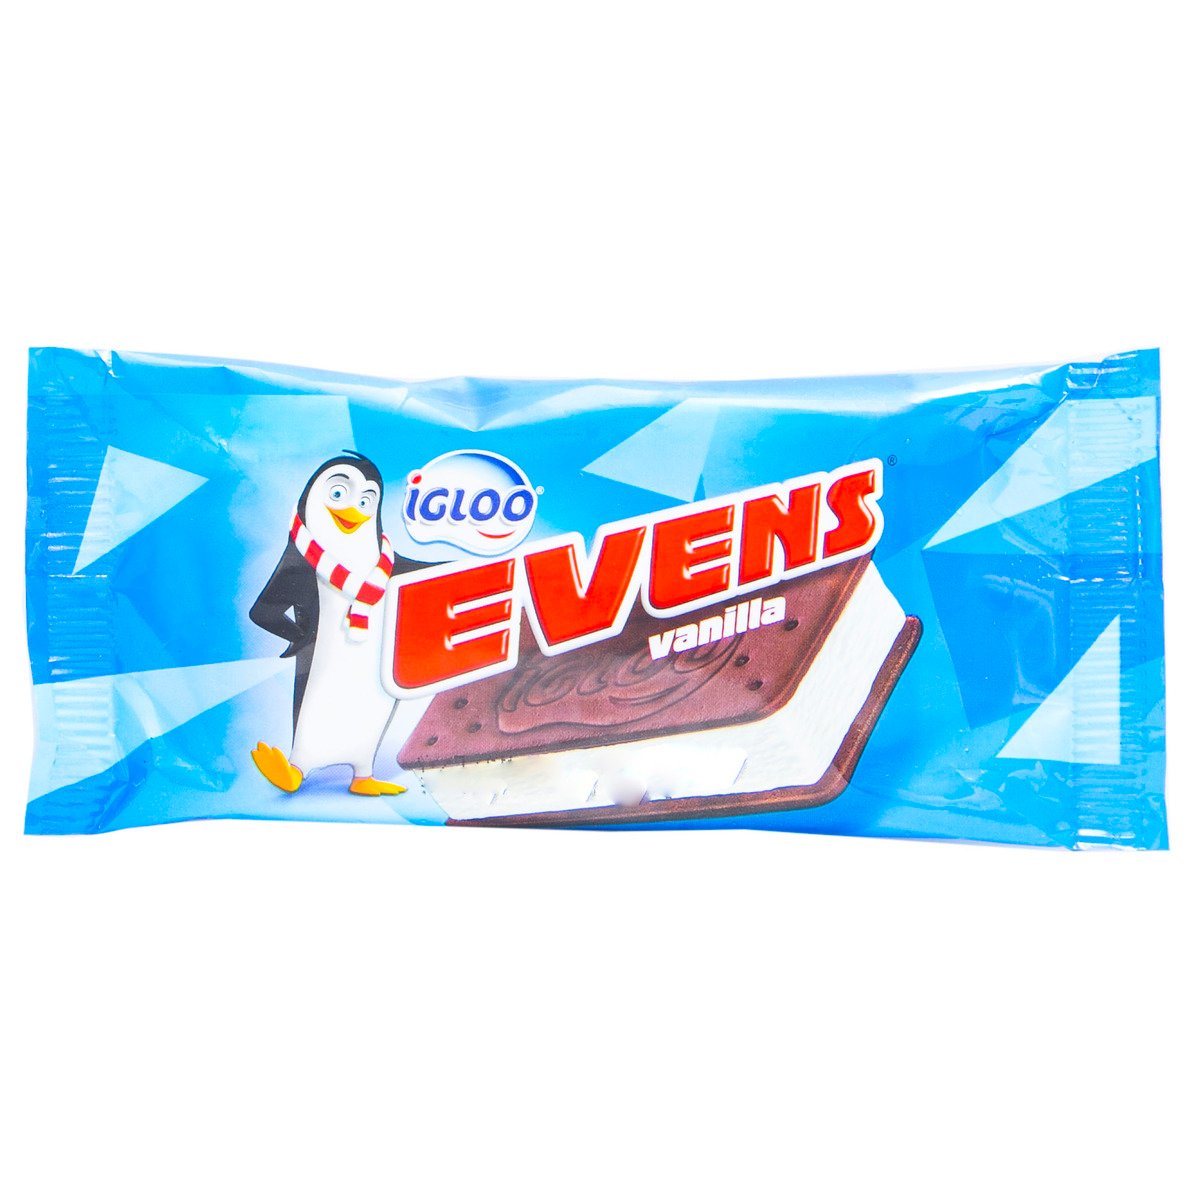 Igloo Evens Vanilla Ice Cream Sandwich 90 ml